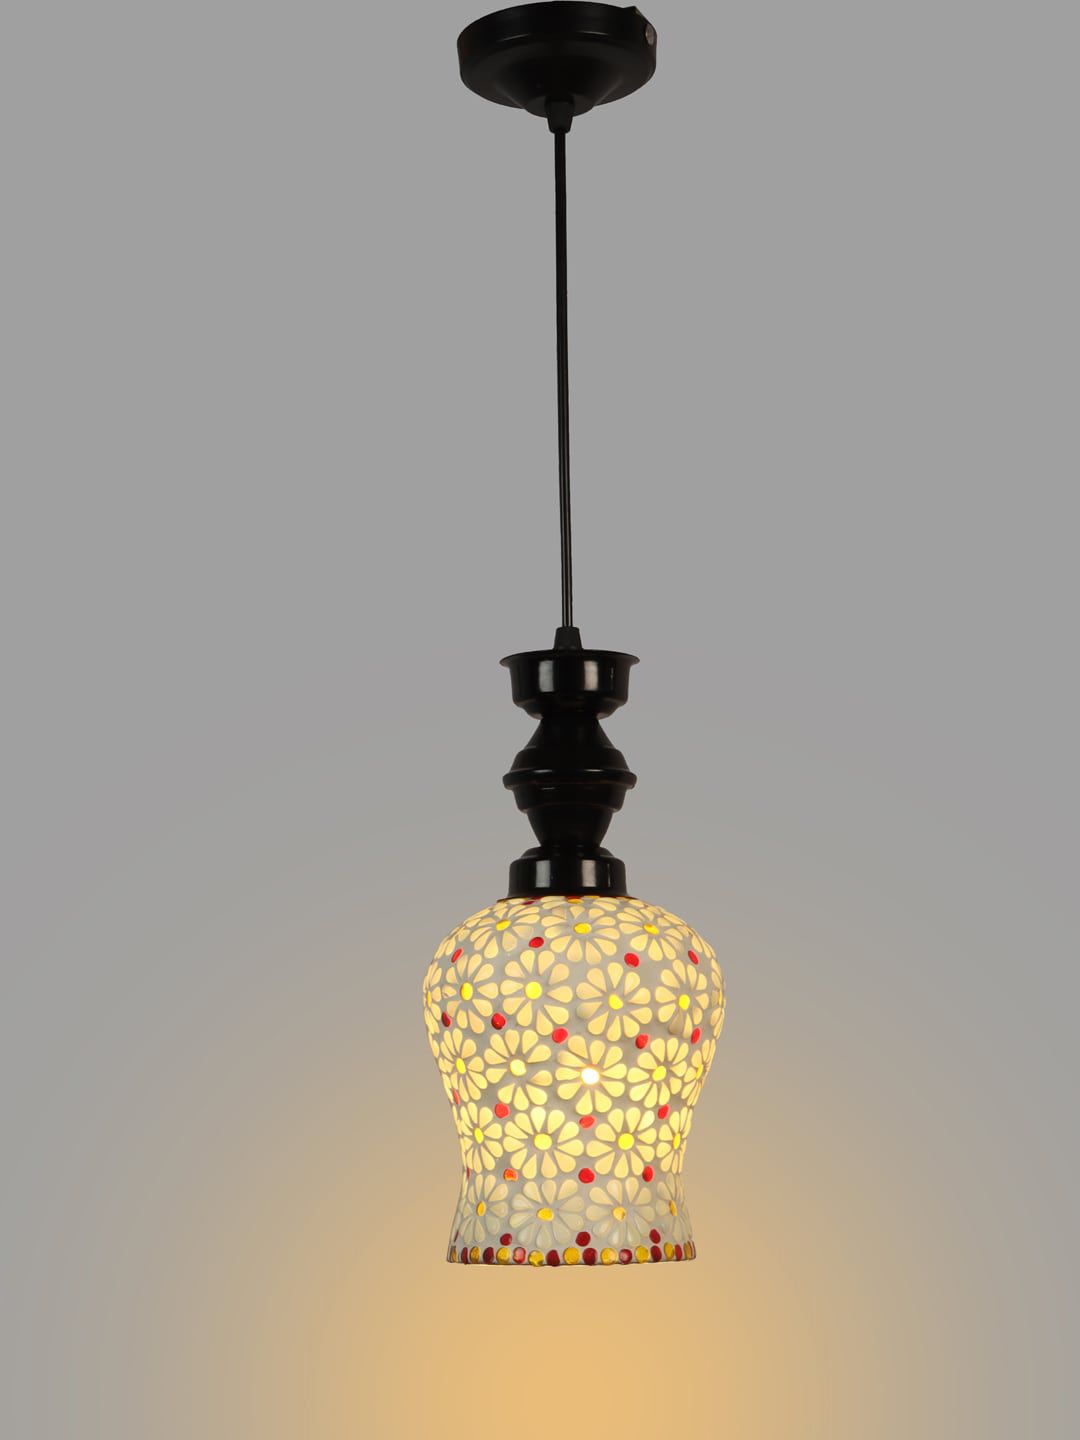 foziq Gold-Toned Textured Ceiling Lamp Price in India